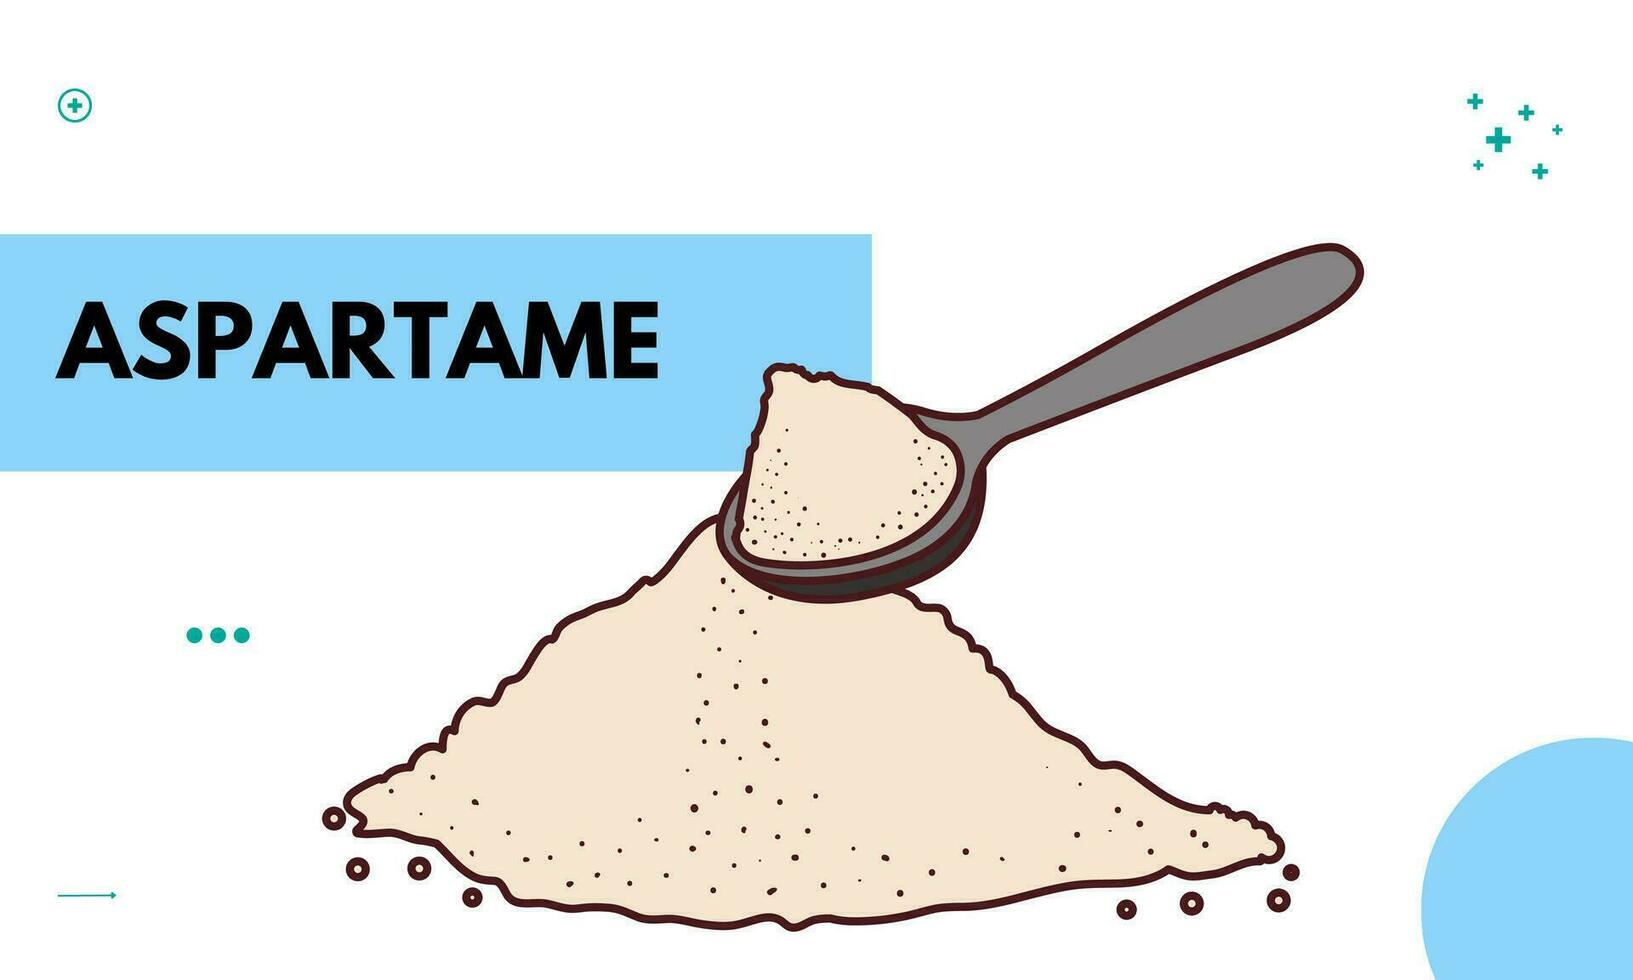 aspartamo es un bajo en calorías artificial edulcorante ese es aproximadamente 100 veces mas dulce que azúcar. edulcorante productos vector